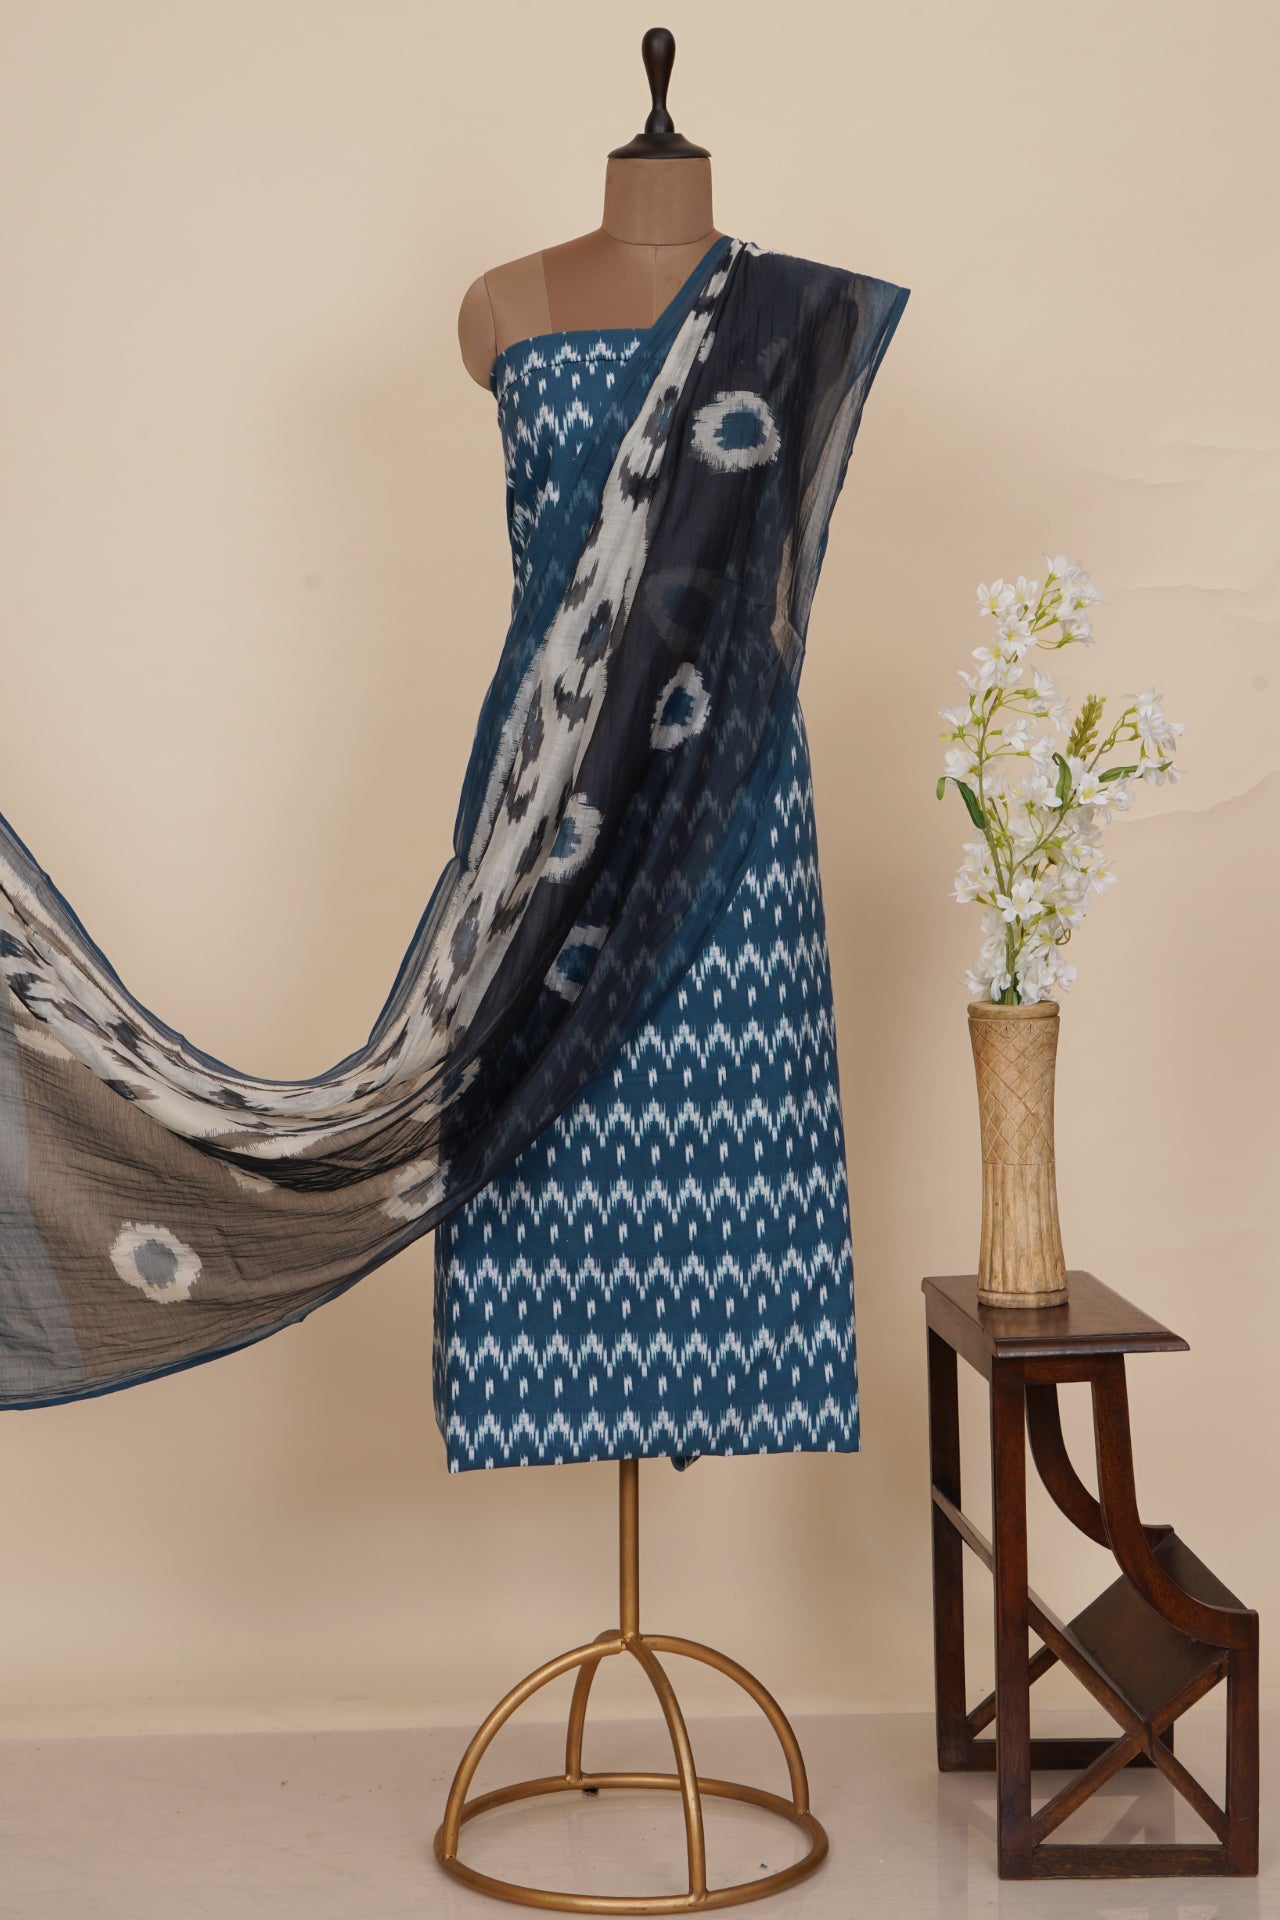 Dark Blue Color Digital Printed Ikat Pattern Muslin Cotton Suit with Fine Chanderi Dupatta